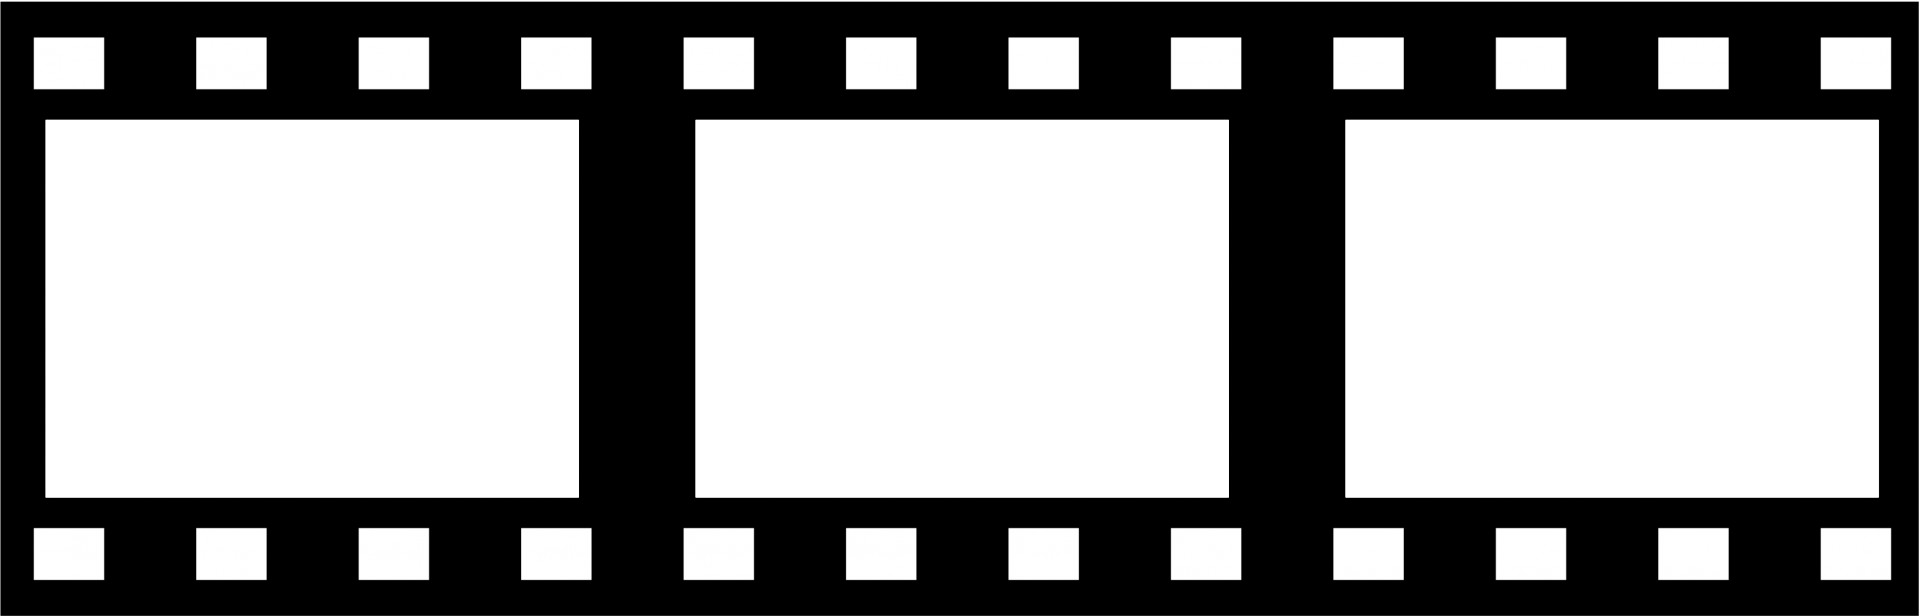 FilmStrip PNG Fichier Image